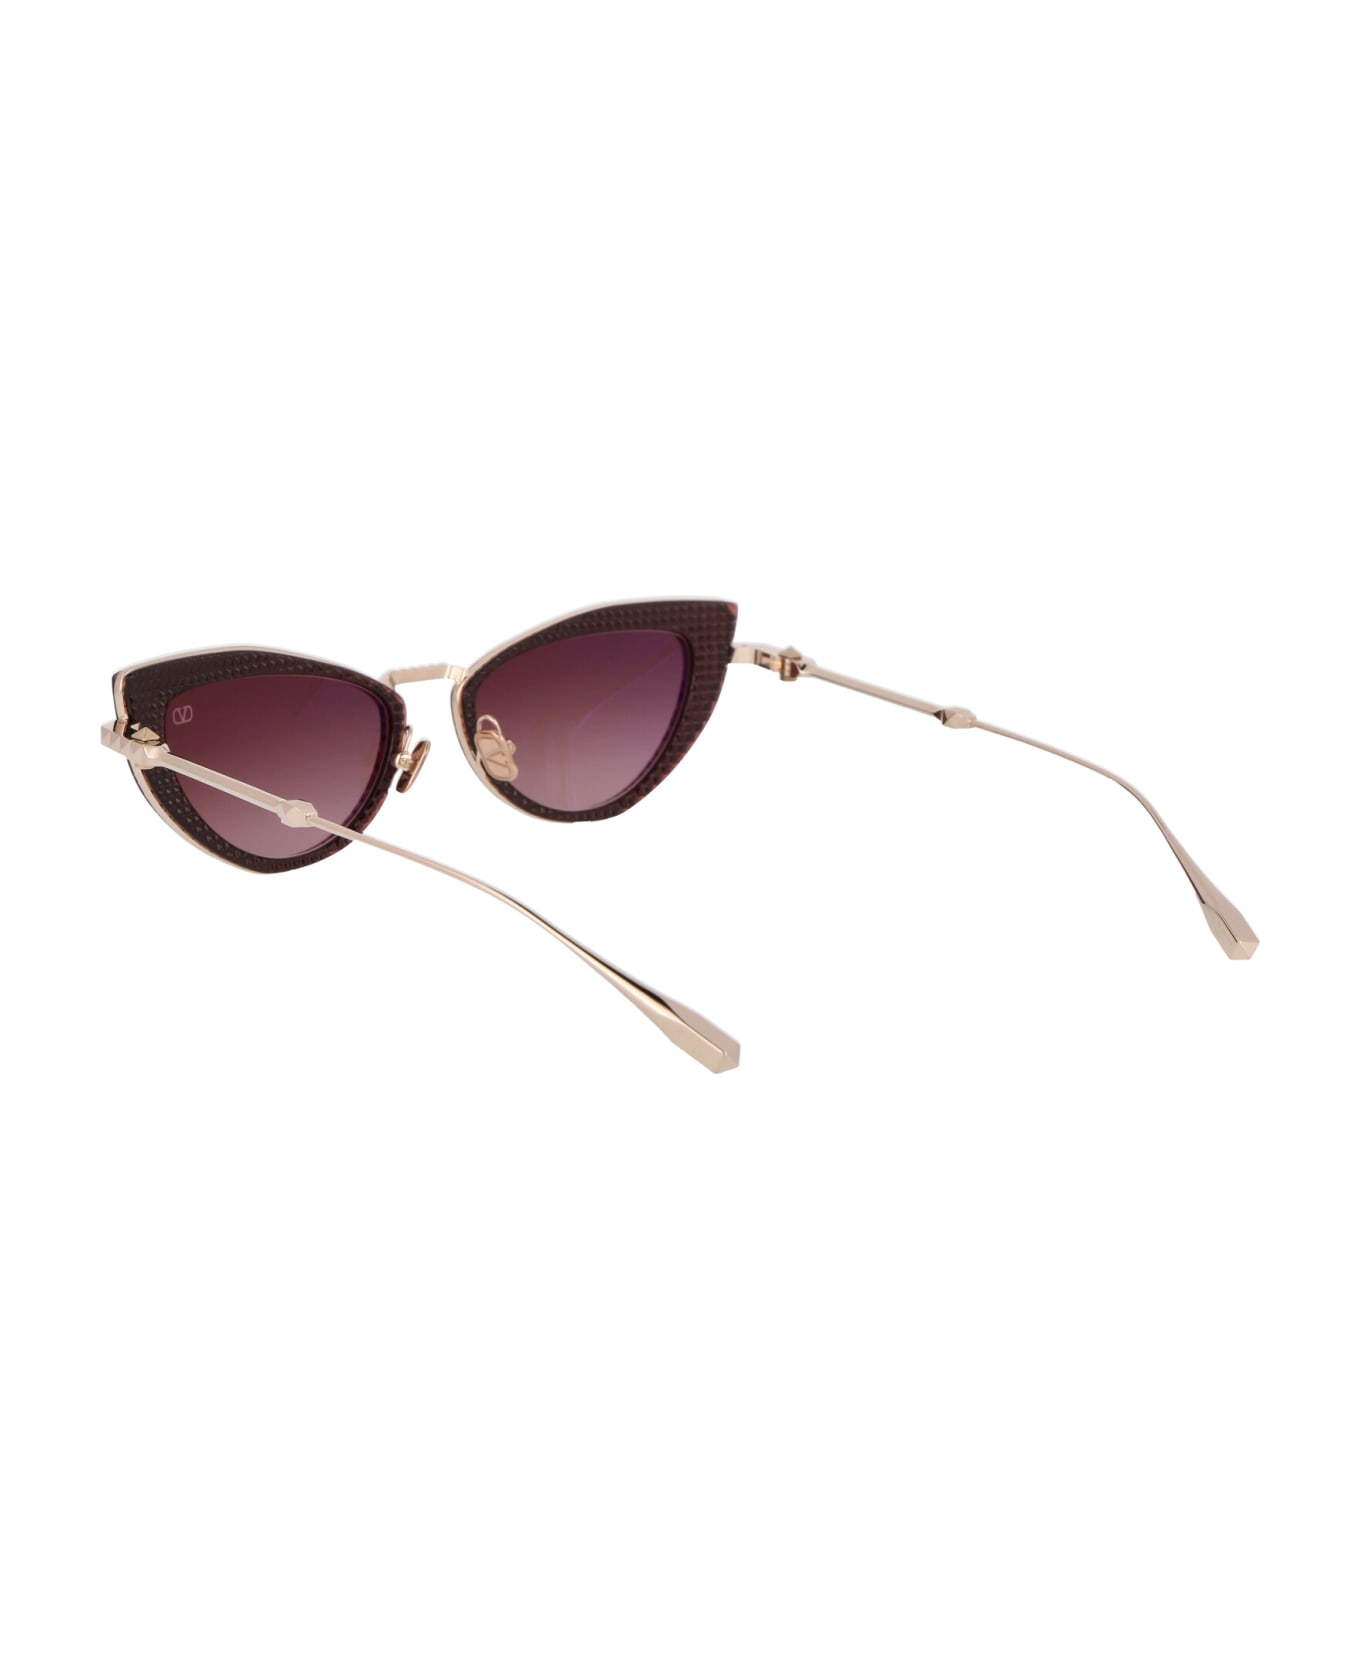 Valentino Eyewear Viii Sunglasses - WHITE GOLD CRYSTAL BORDEAUX W/ DARK ROSE TO LIGHT ROSE GRADIENT サングラス